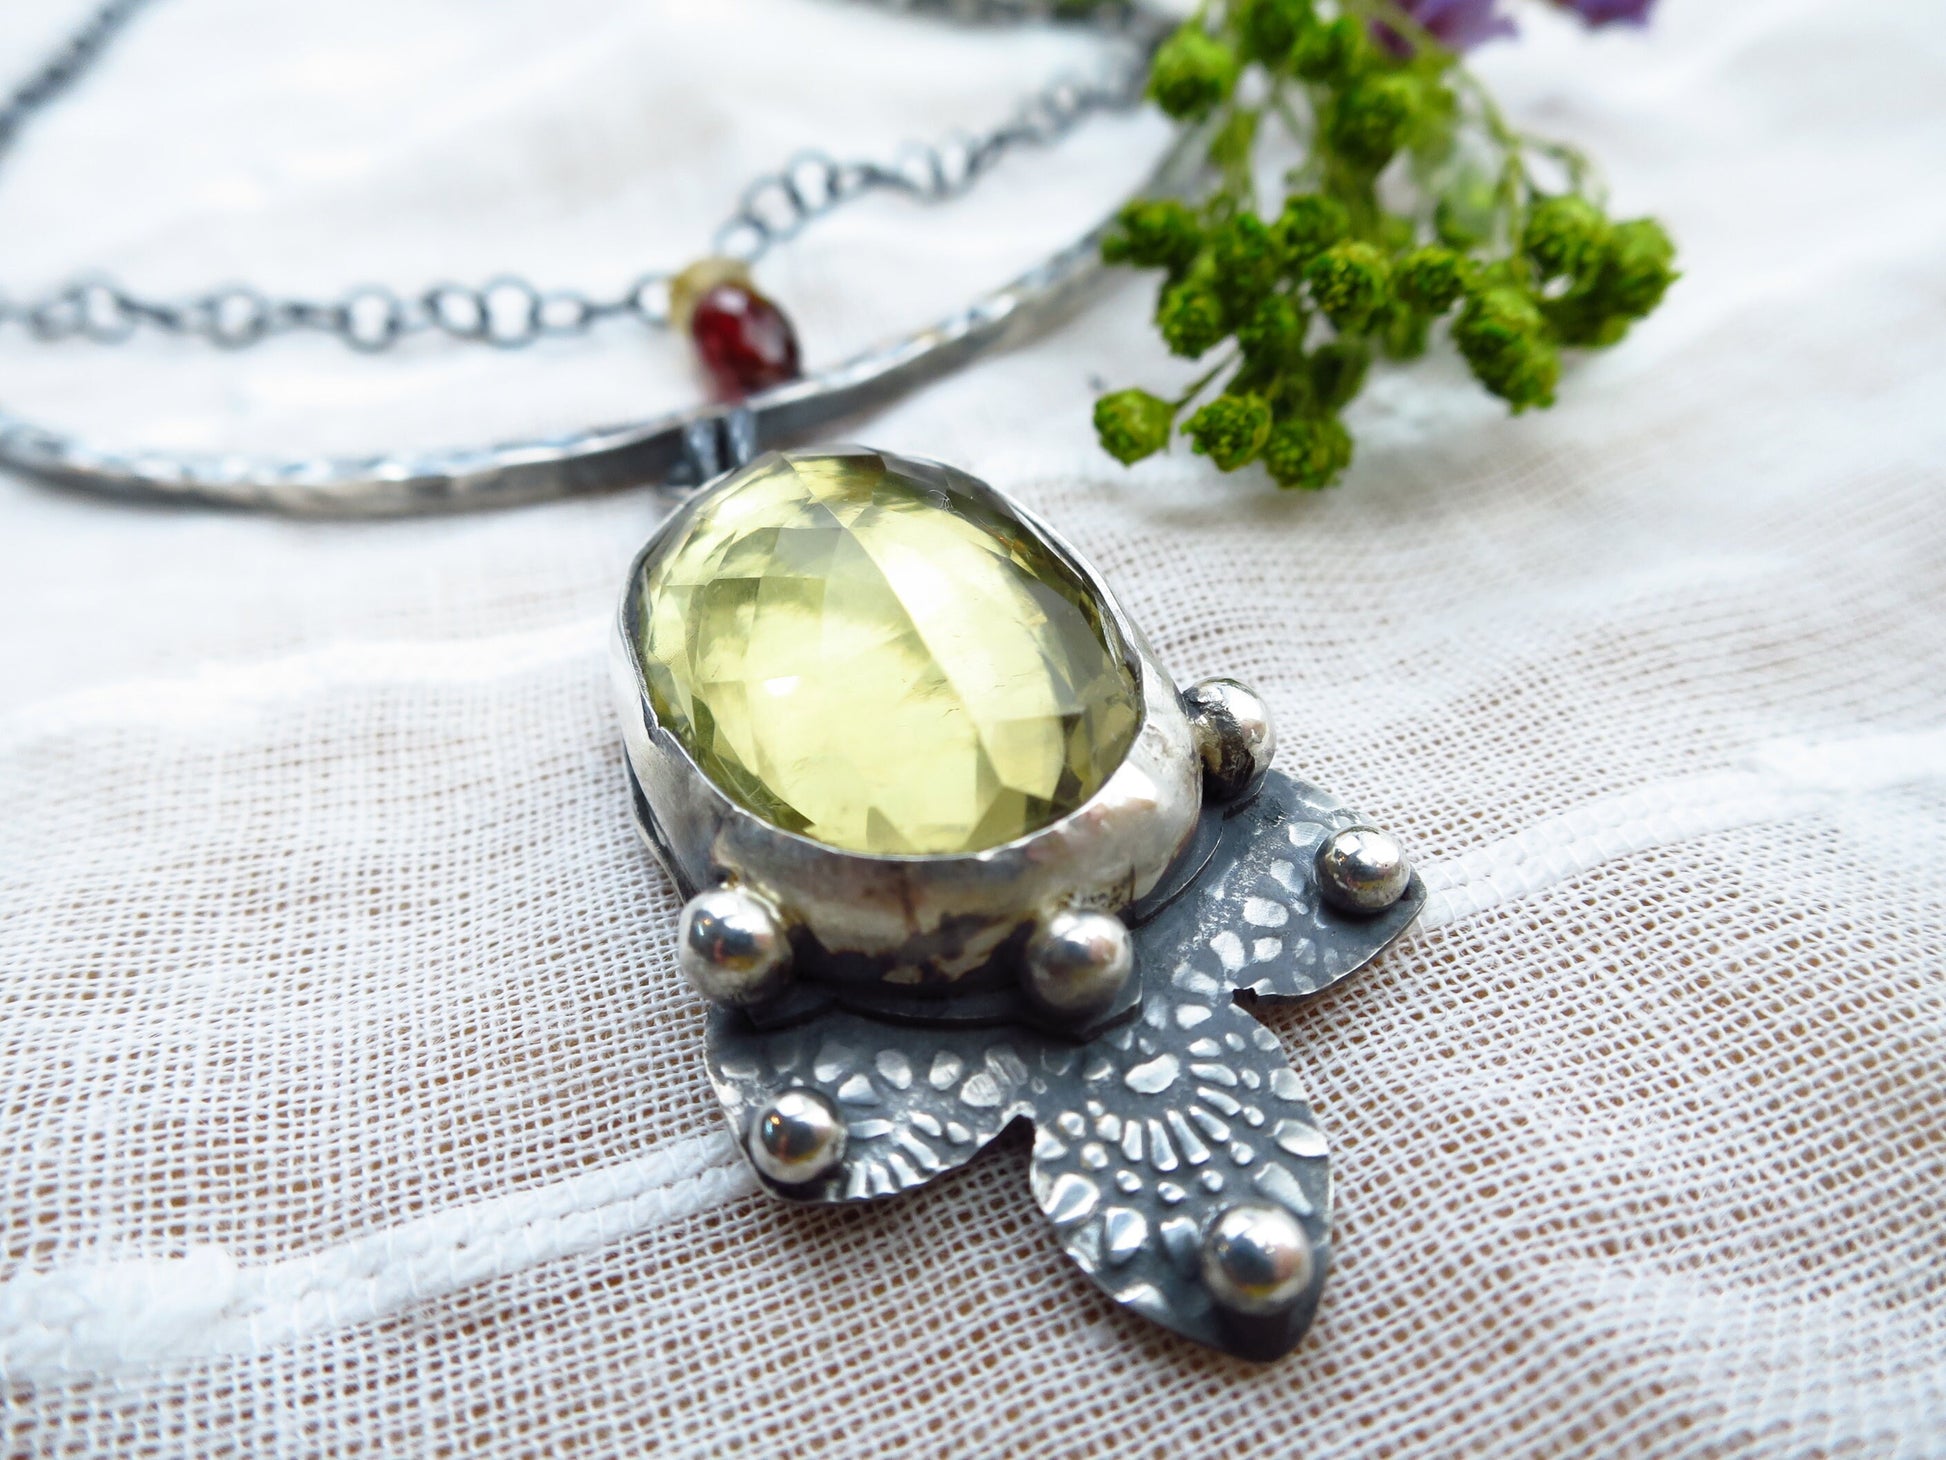 Luminous sun lotus citrine pendant necklace garnet Sterling Silver 925 Collier unique faceted gemstone natural